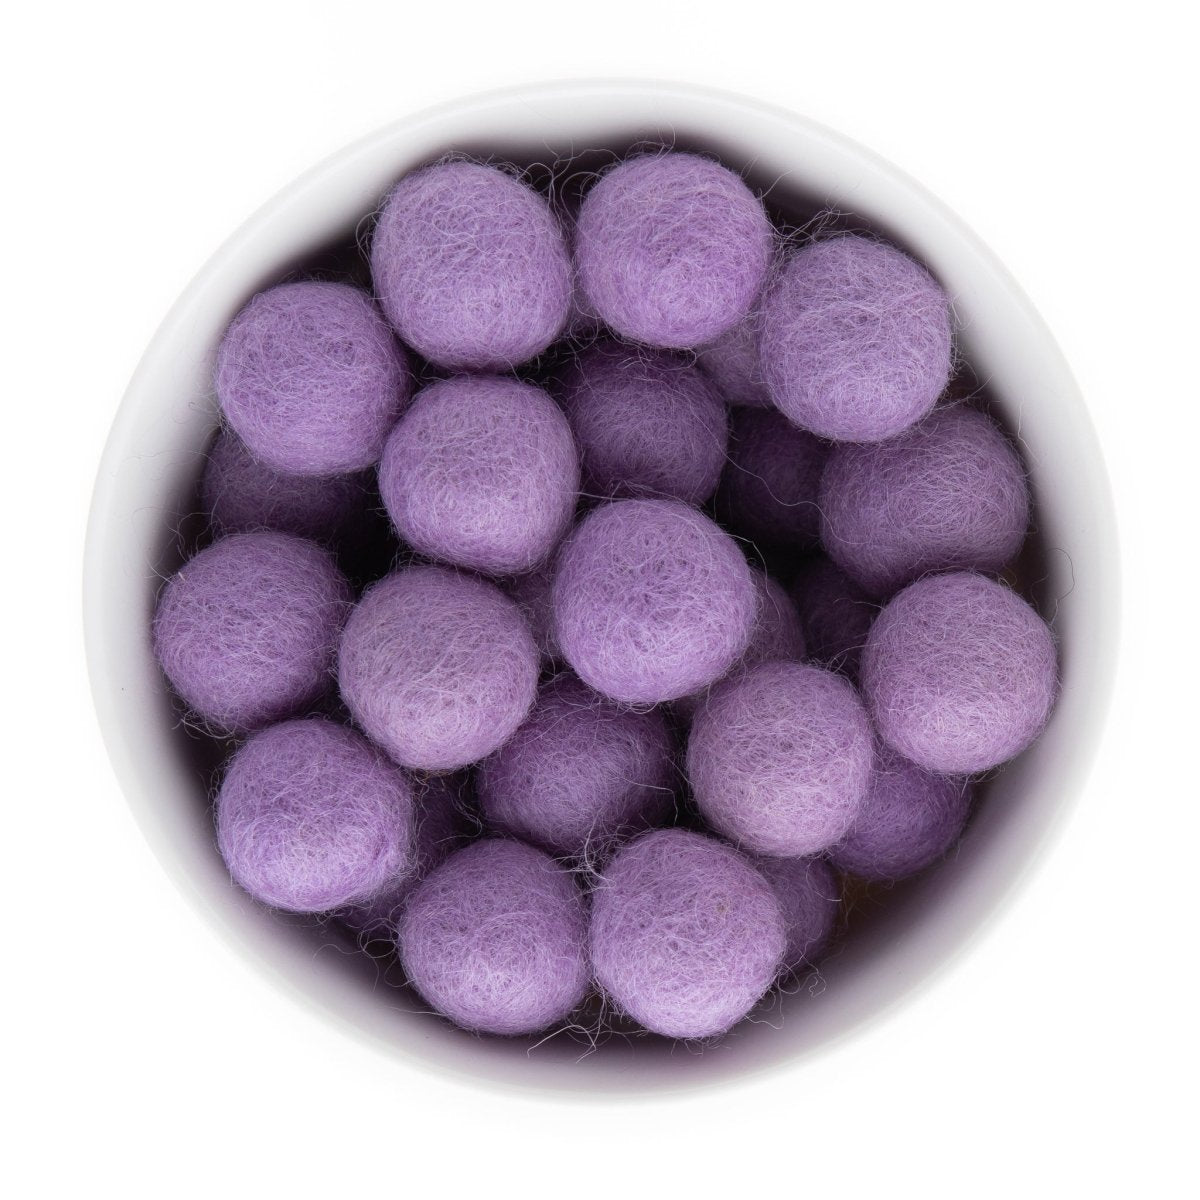 Felt & Crochet Beads Felt Balls 22mm Lavender from Cara & Co Craft Supply